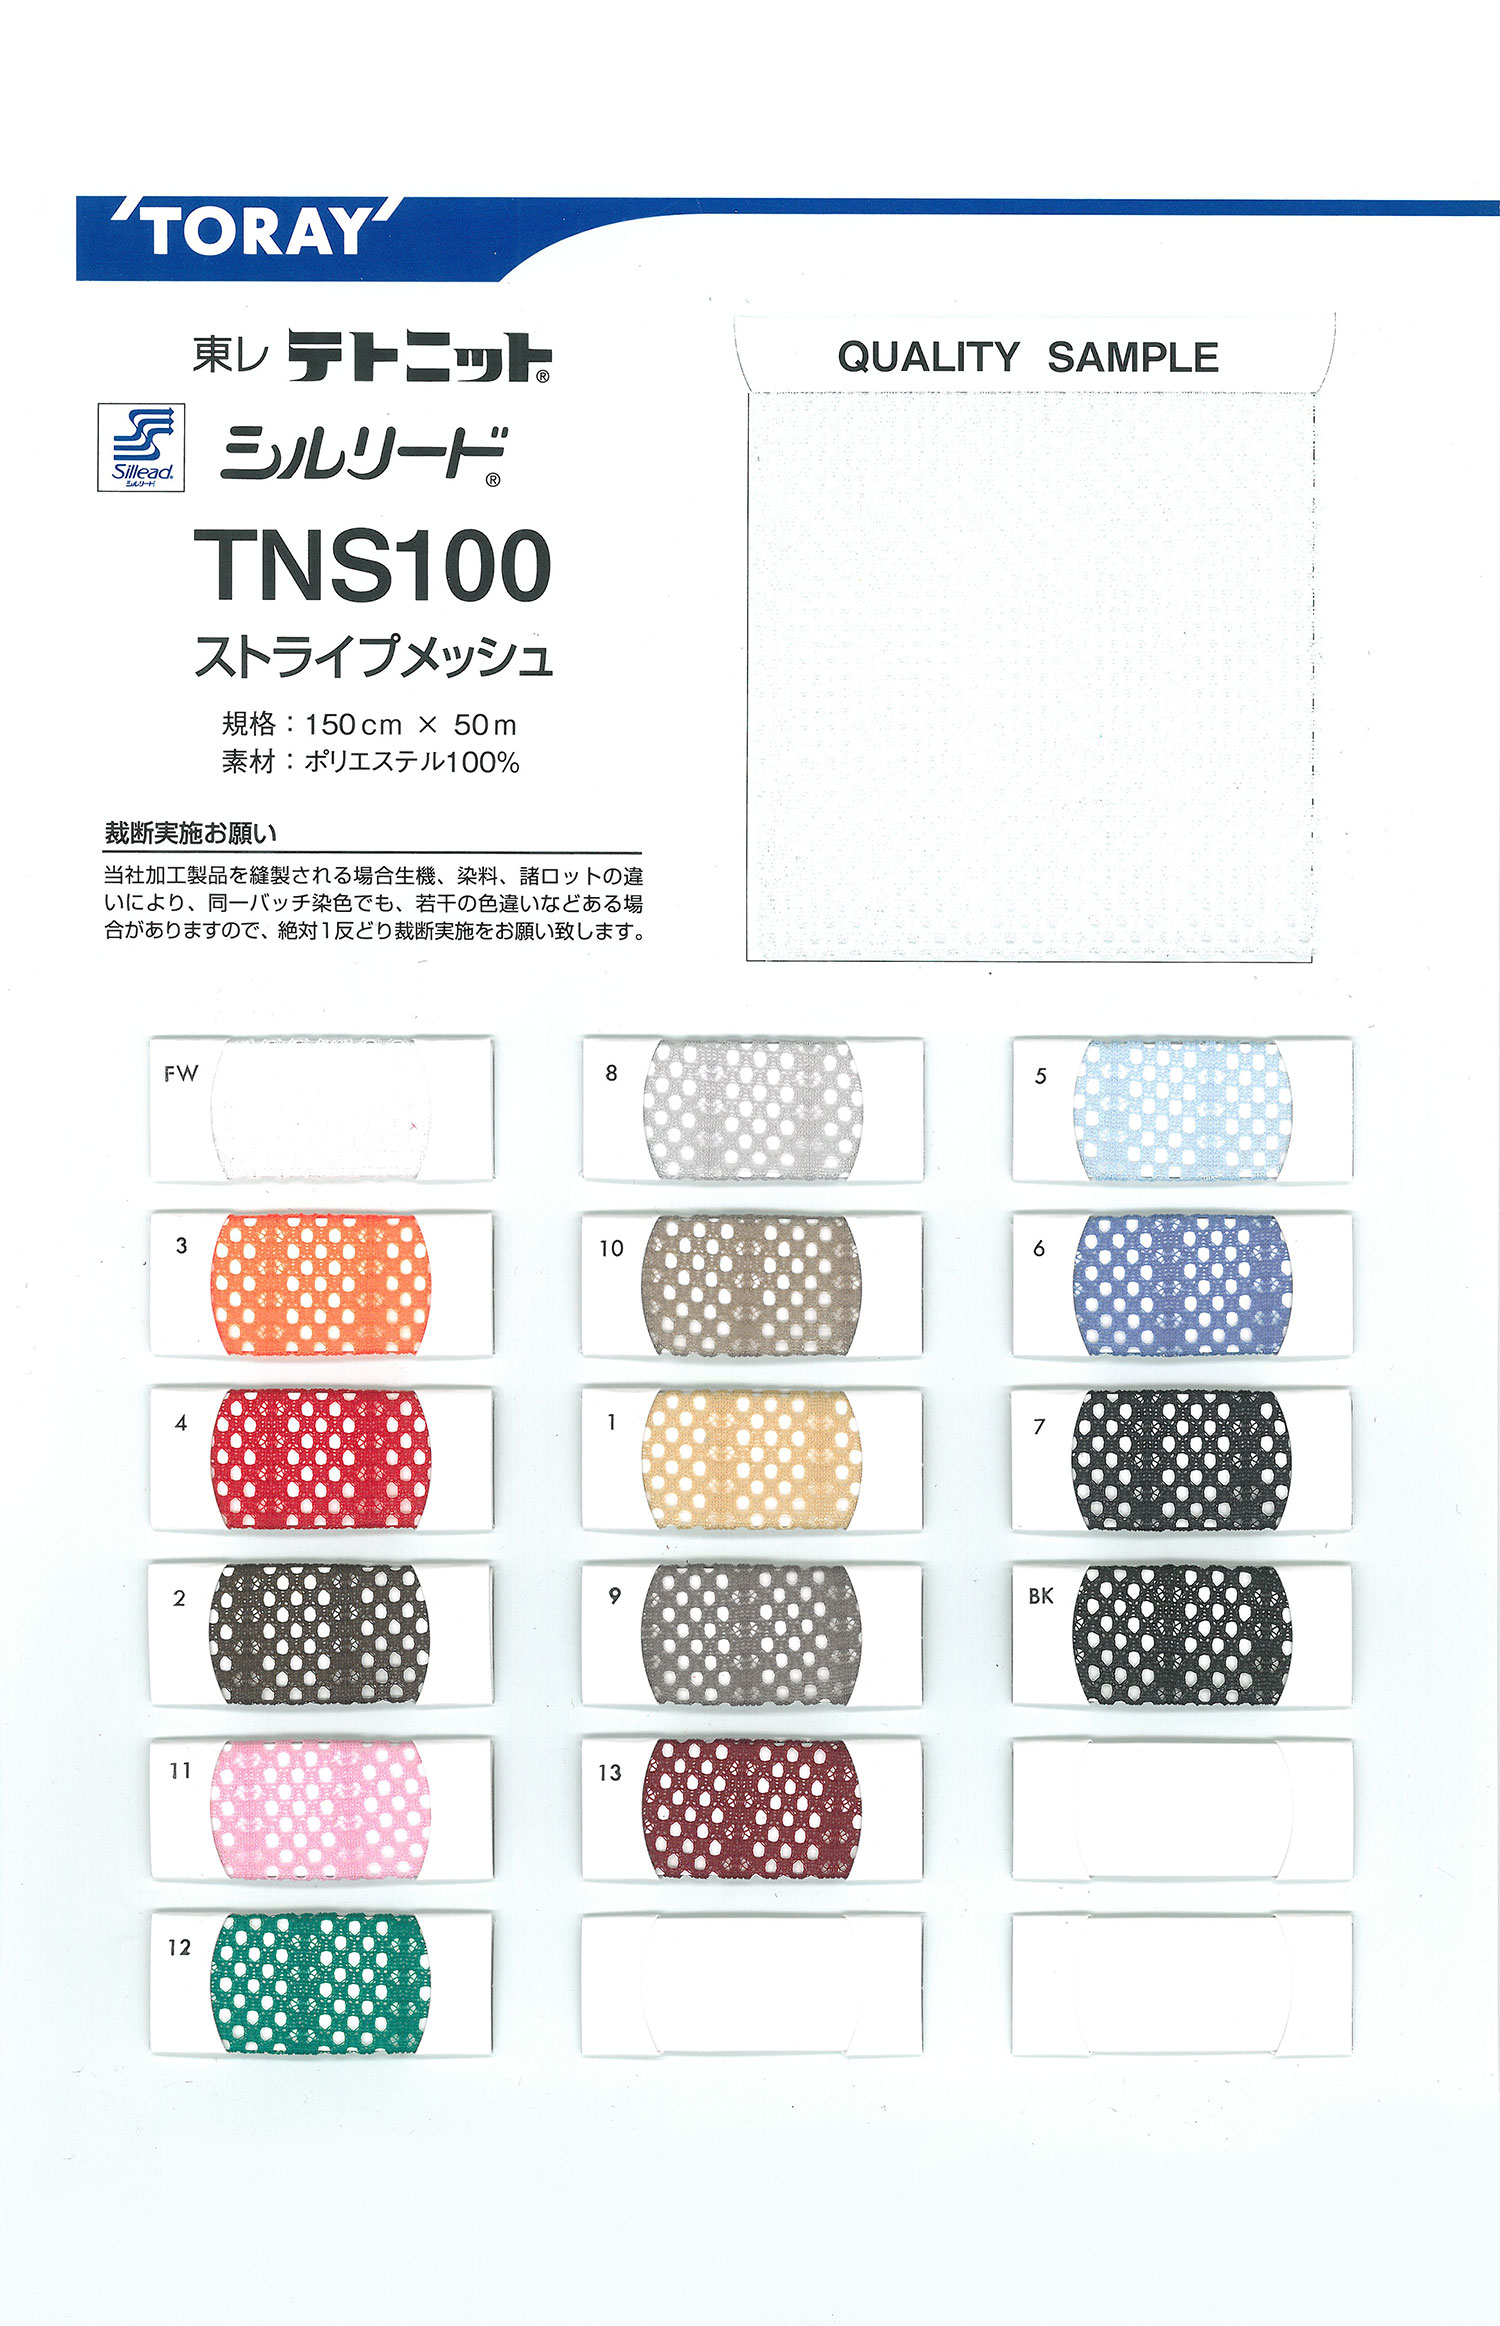 TNS100 Malha Listrada Sillead TNS100[Resina] TORAY